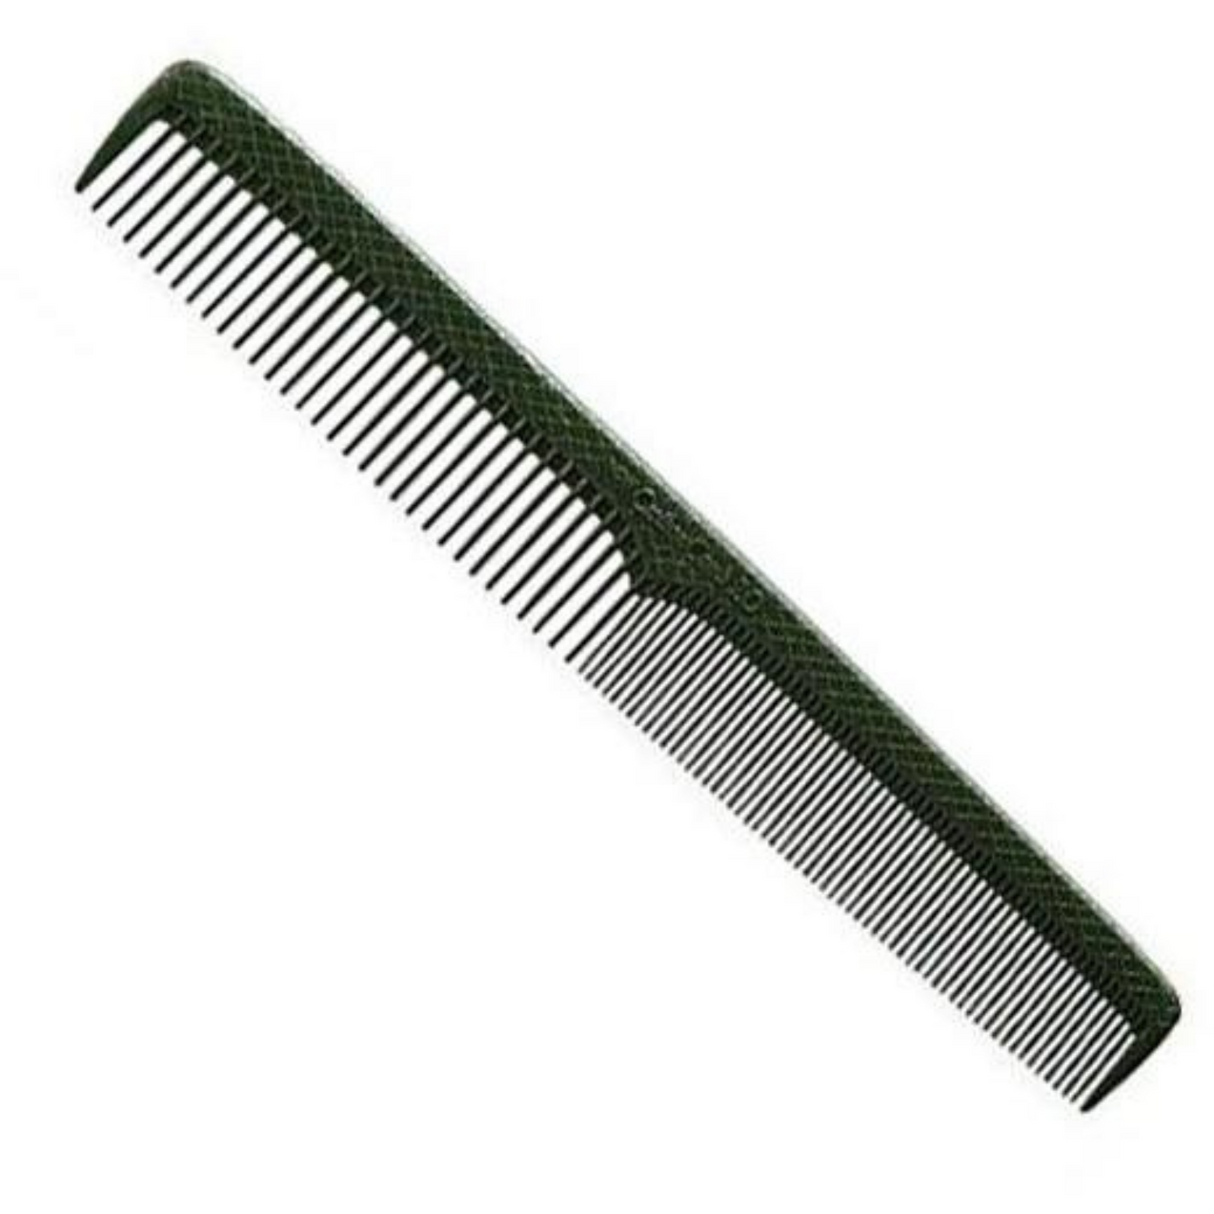 Cesibon #20 Cutting Comb - Dark Green